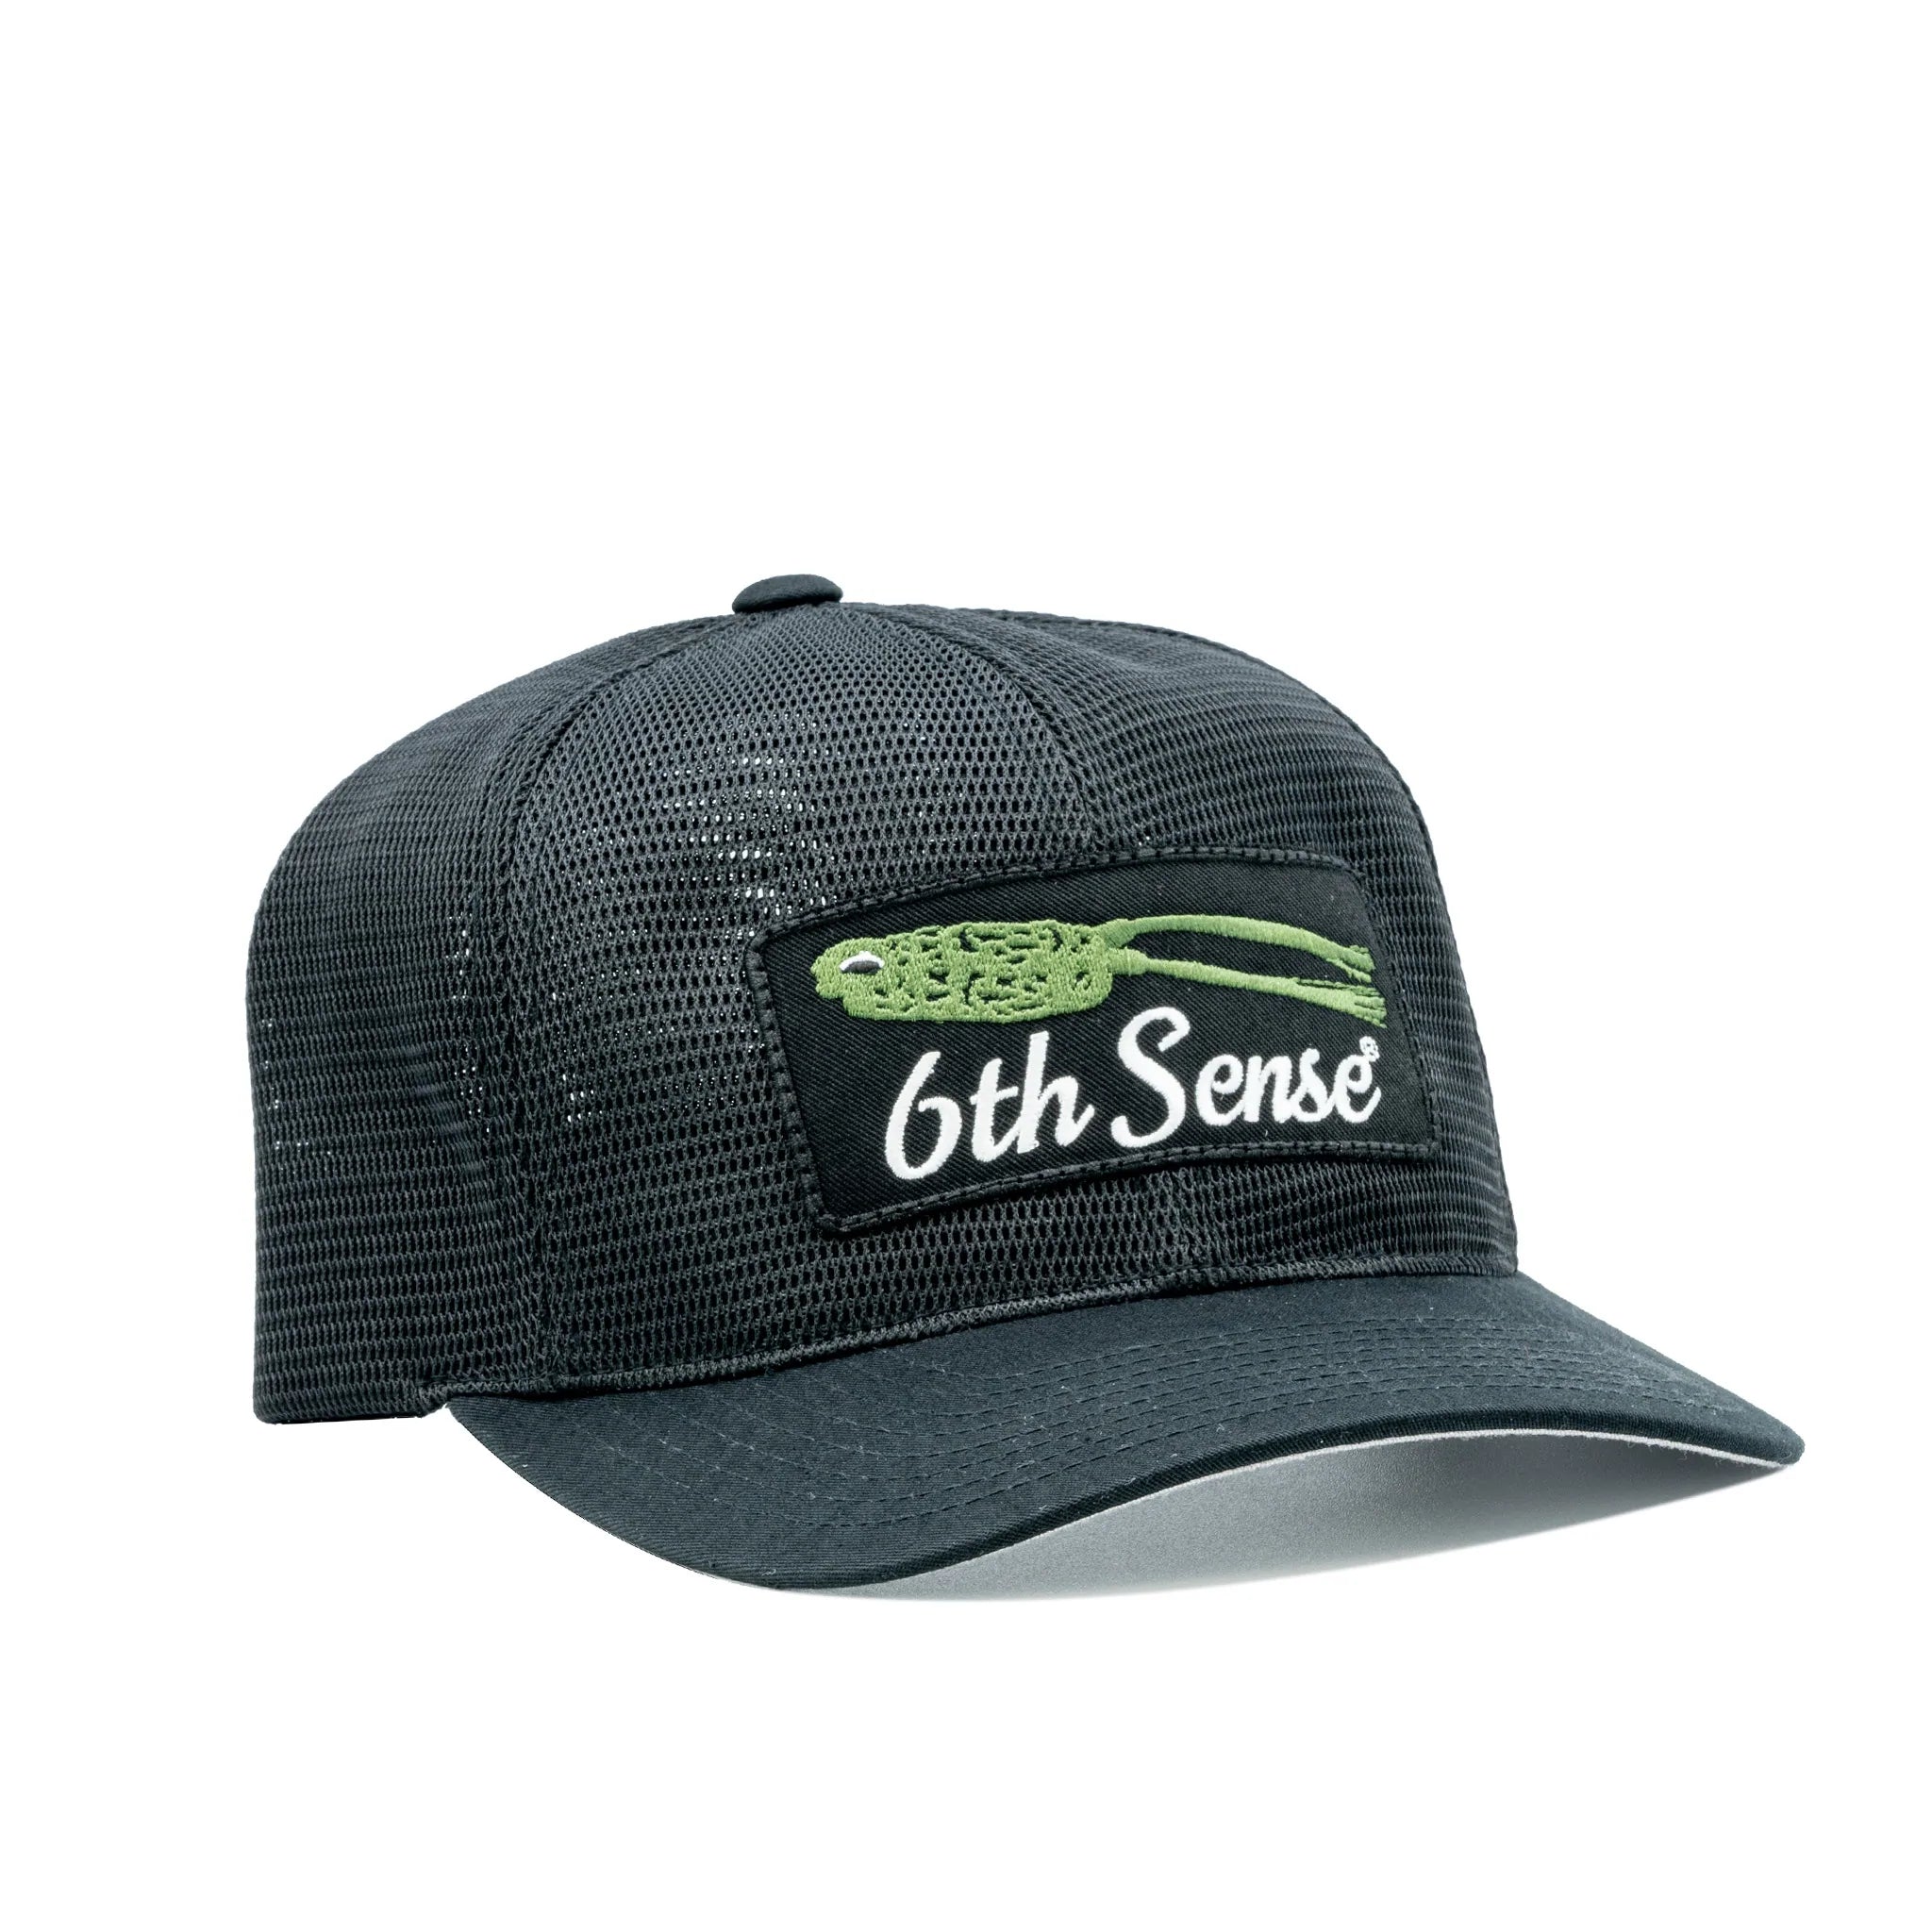 6th Sense Fishing Snapback Hat